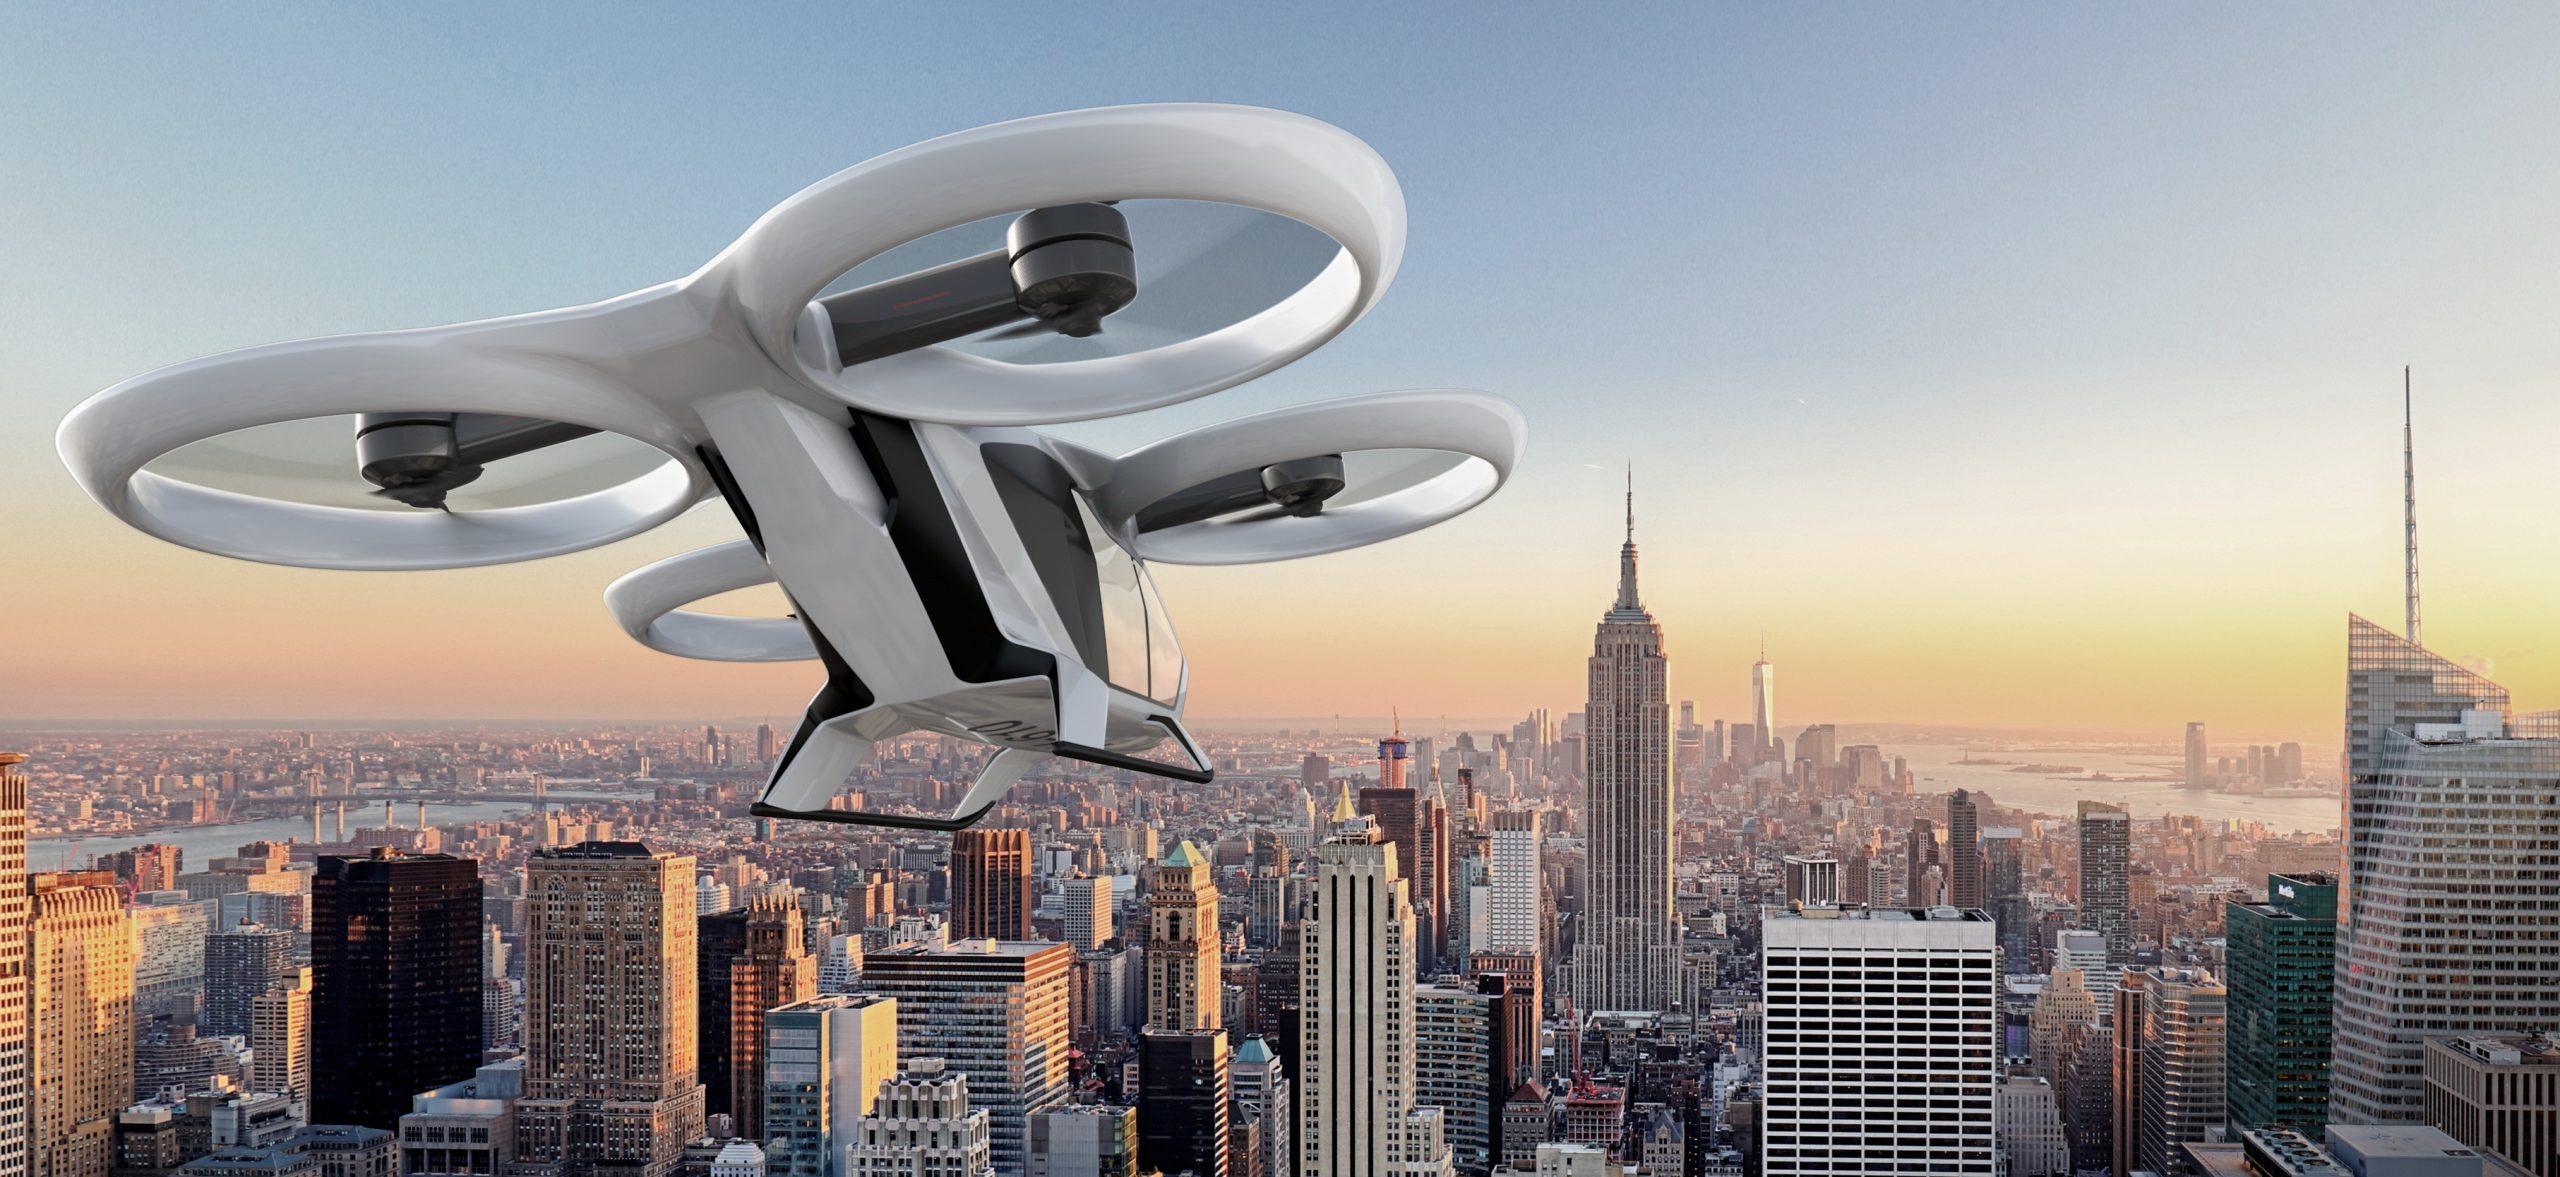 CityAirbus: Το «μέλλον» βρίσκεται ήδη εδώ – Τα ιπτάμενα ταξί που συναρπάζουν (φωτό, βίντεο)